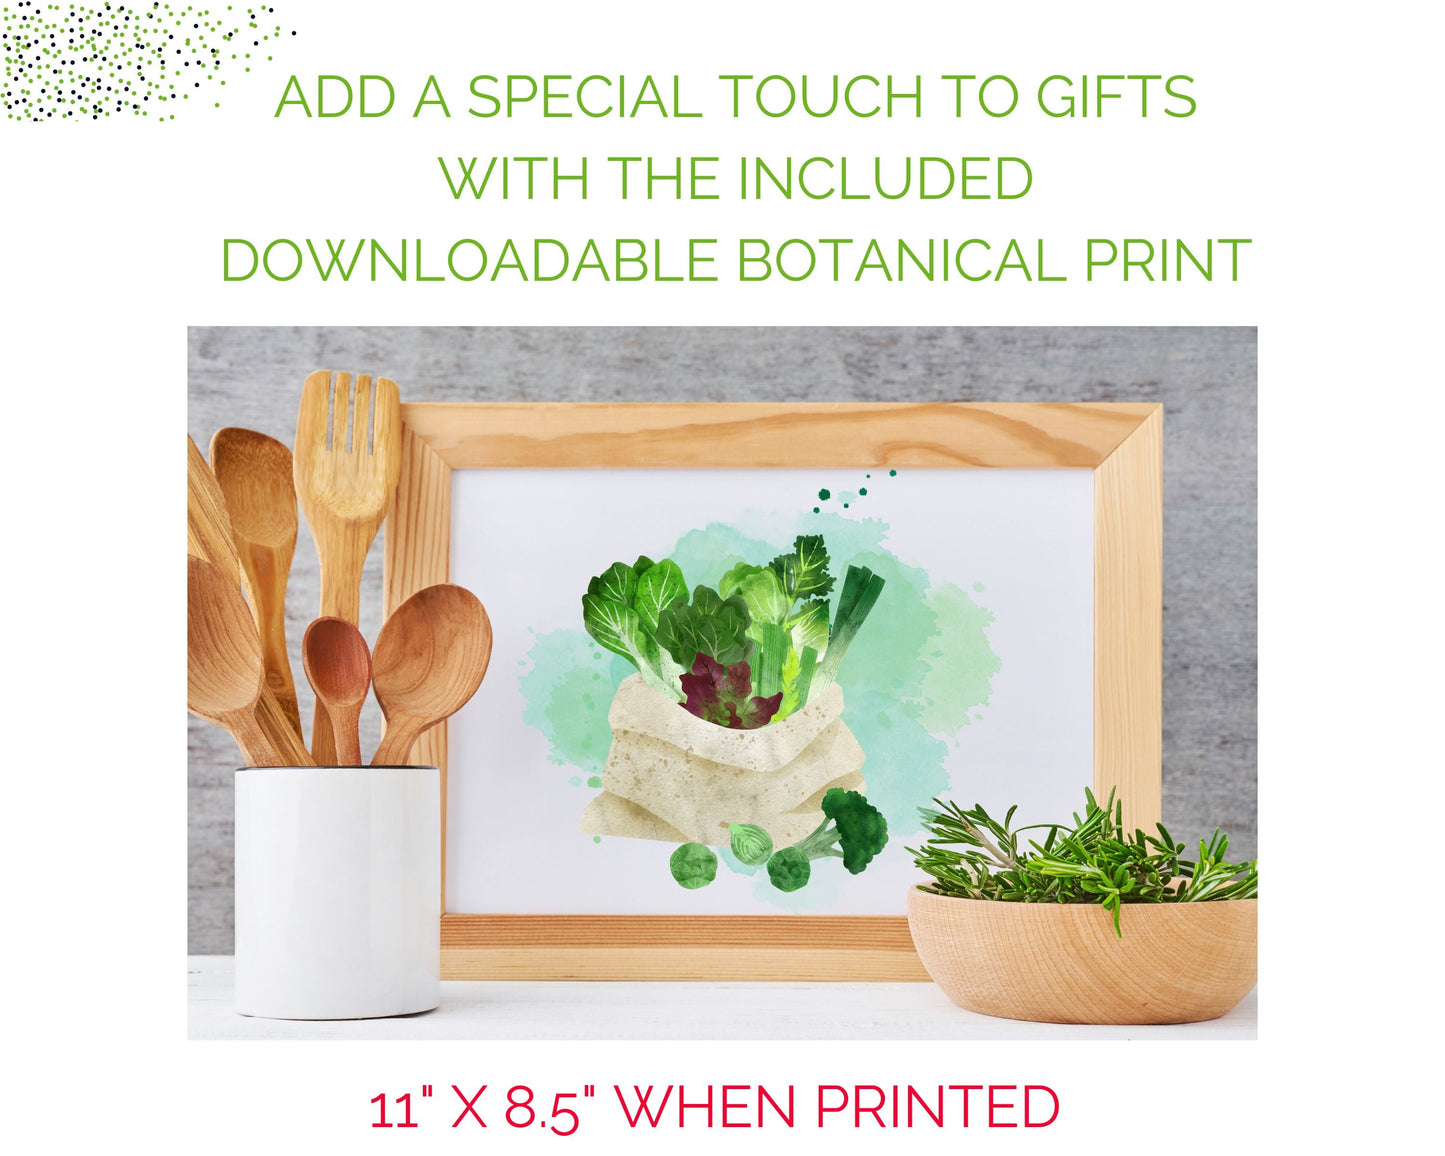 Organic Leafy Greens Starter Kit - Corporate Gift